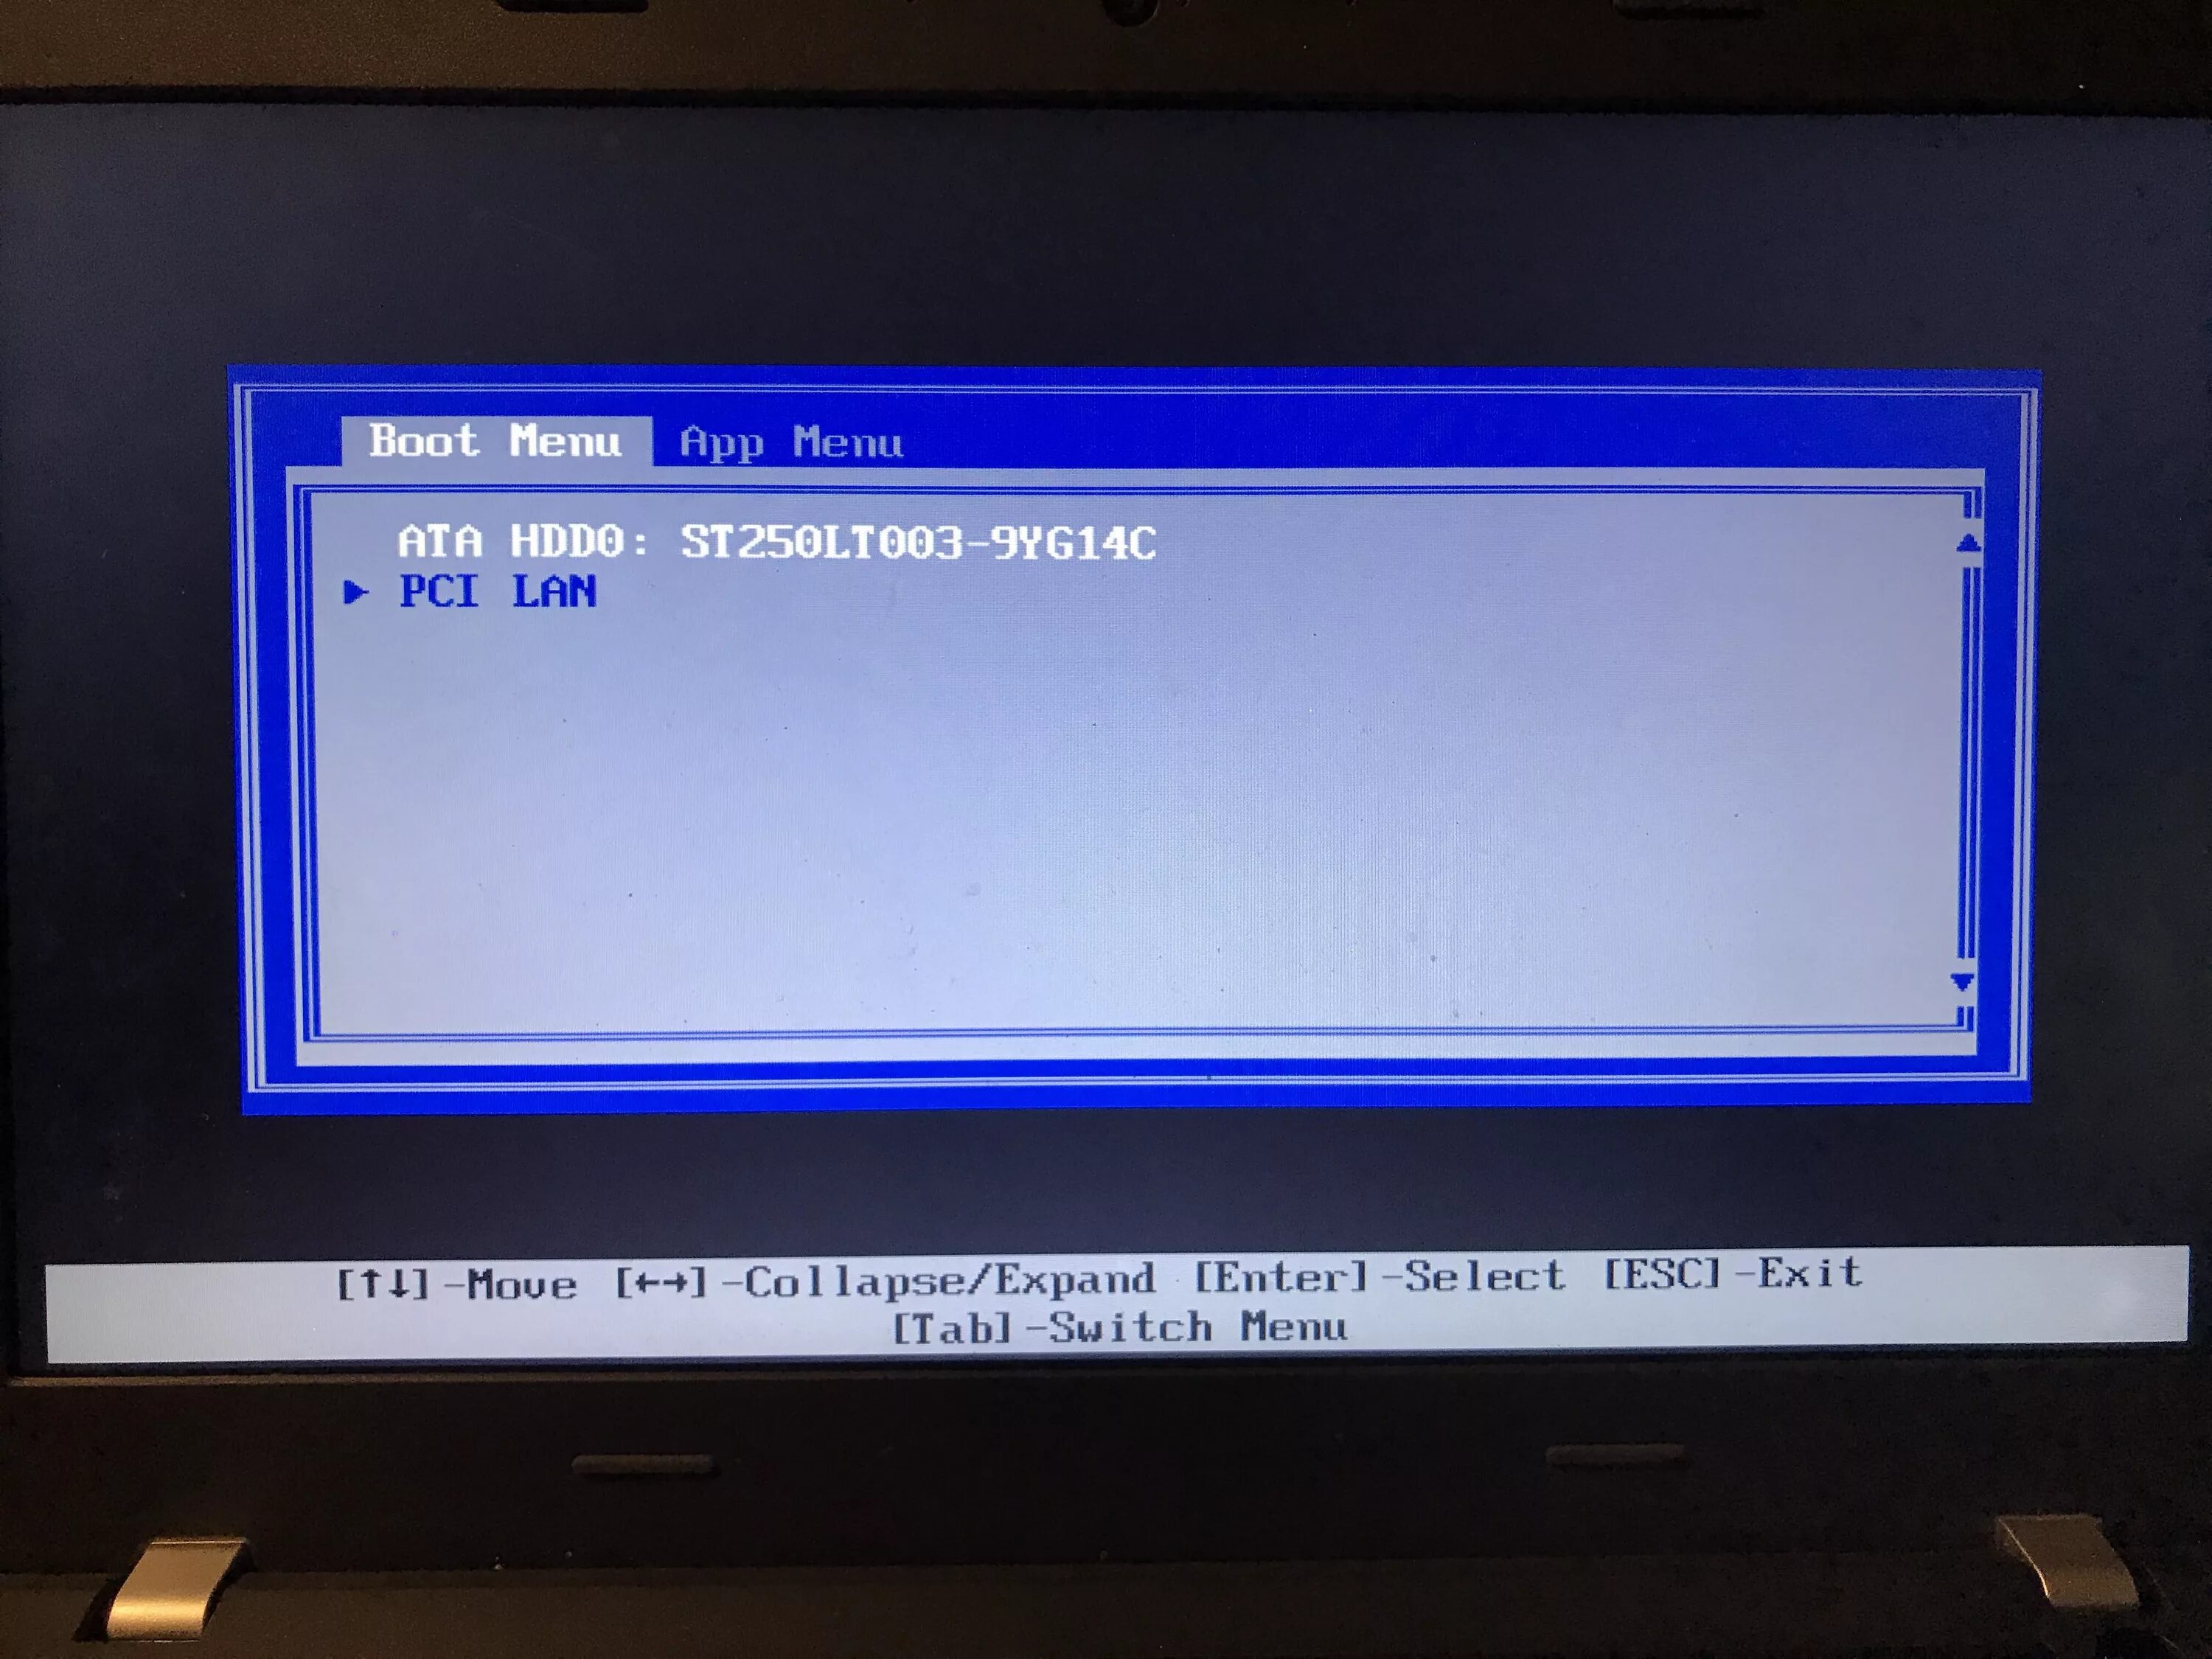 Boot меню. BIOS Boot menu ноутбук. Меню загрузки леново. Меню загрузки.